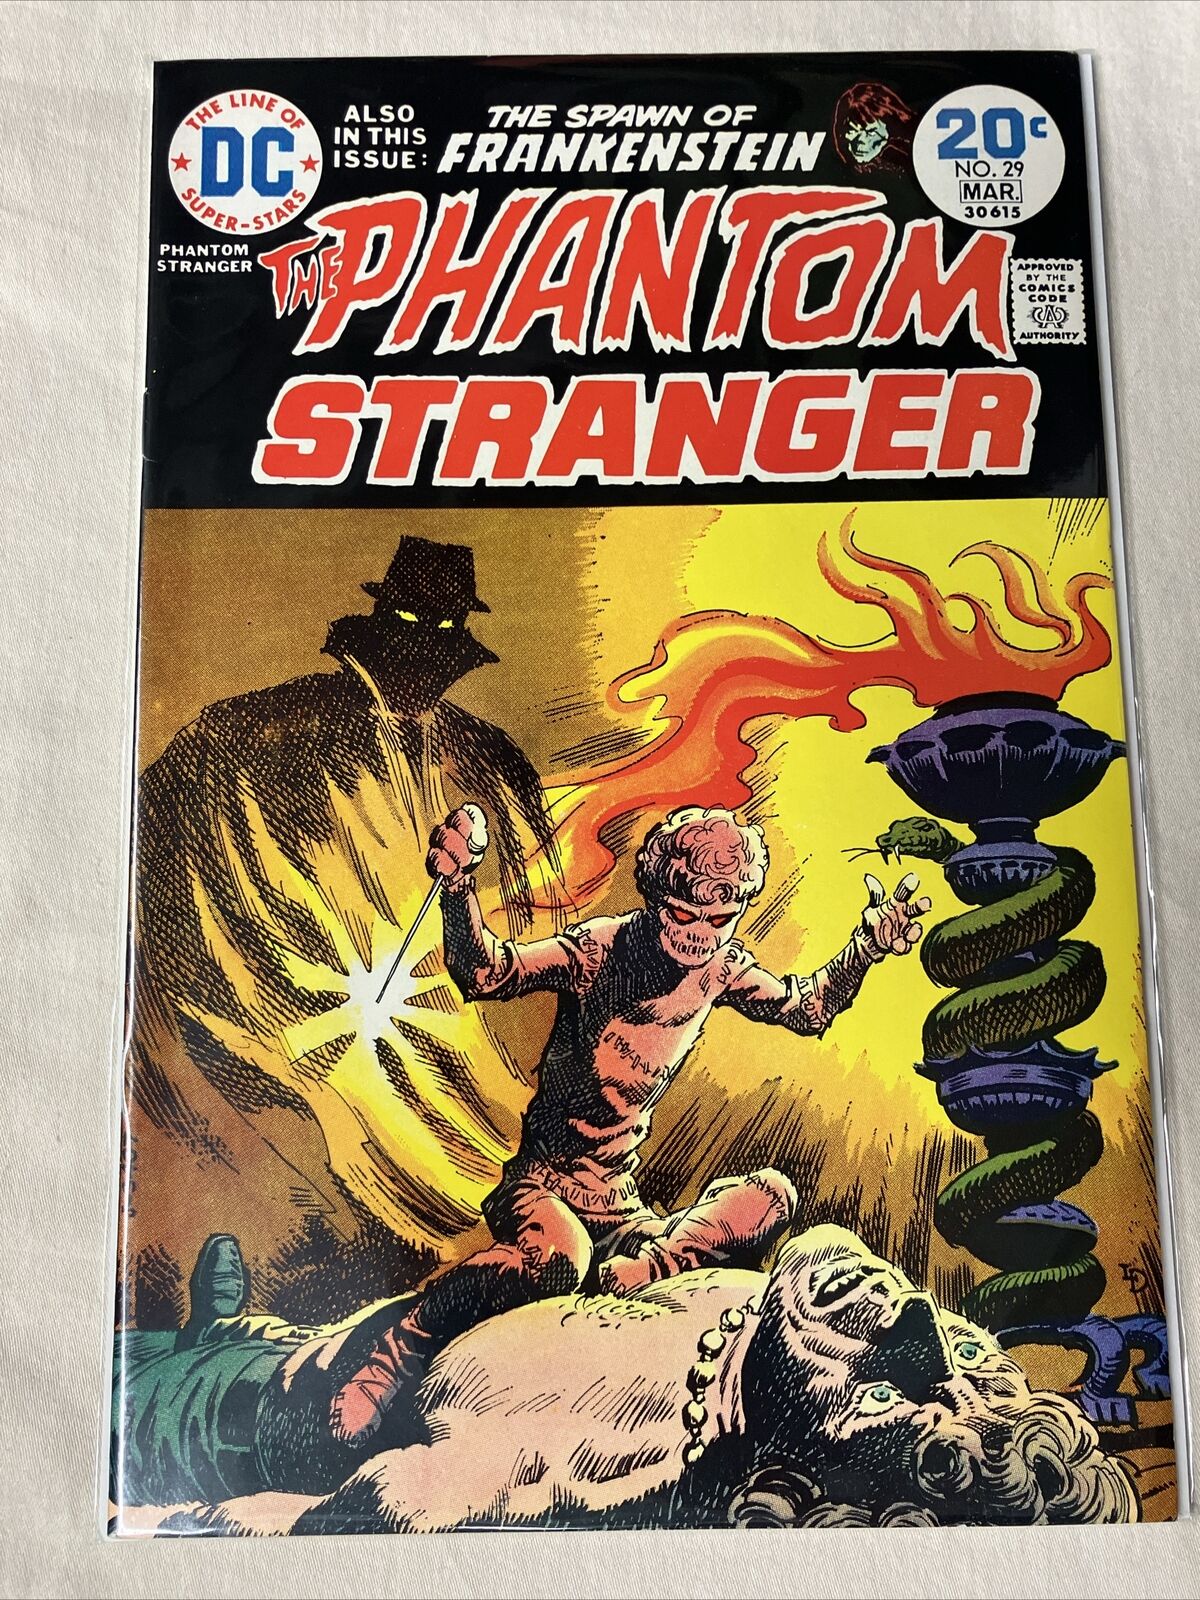 THE PHANTOM STRANGER #29 VF-NM JIM APARO COVER CLASSIC DC HORROR 1973